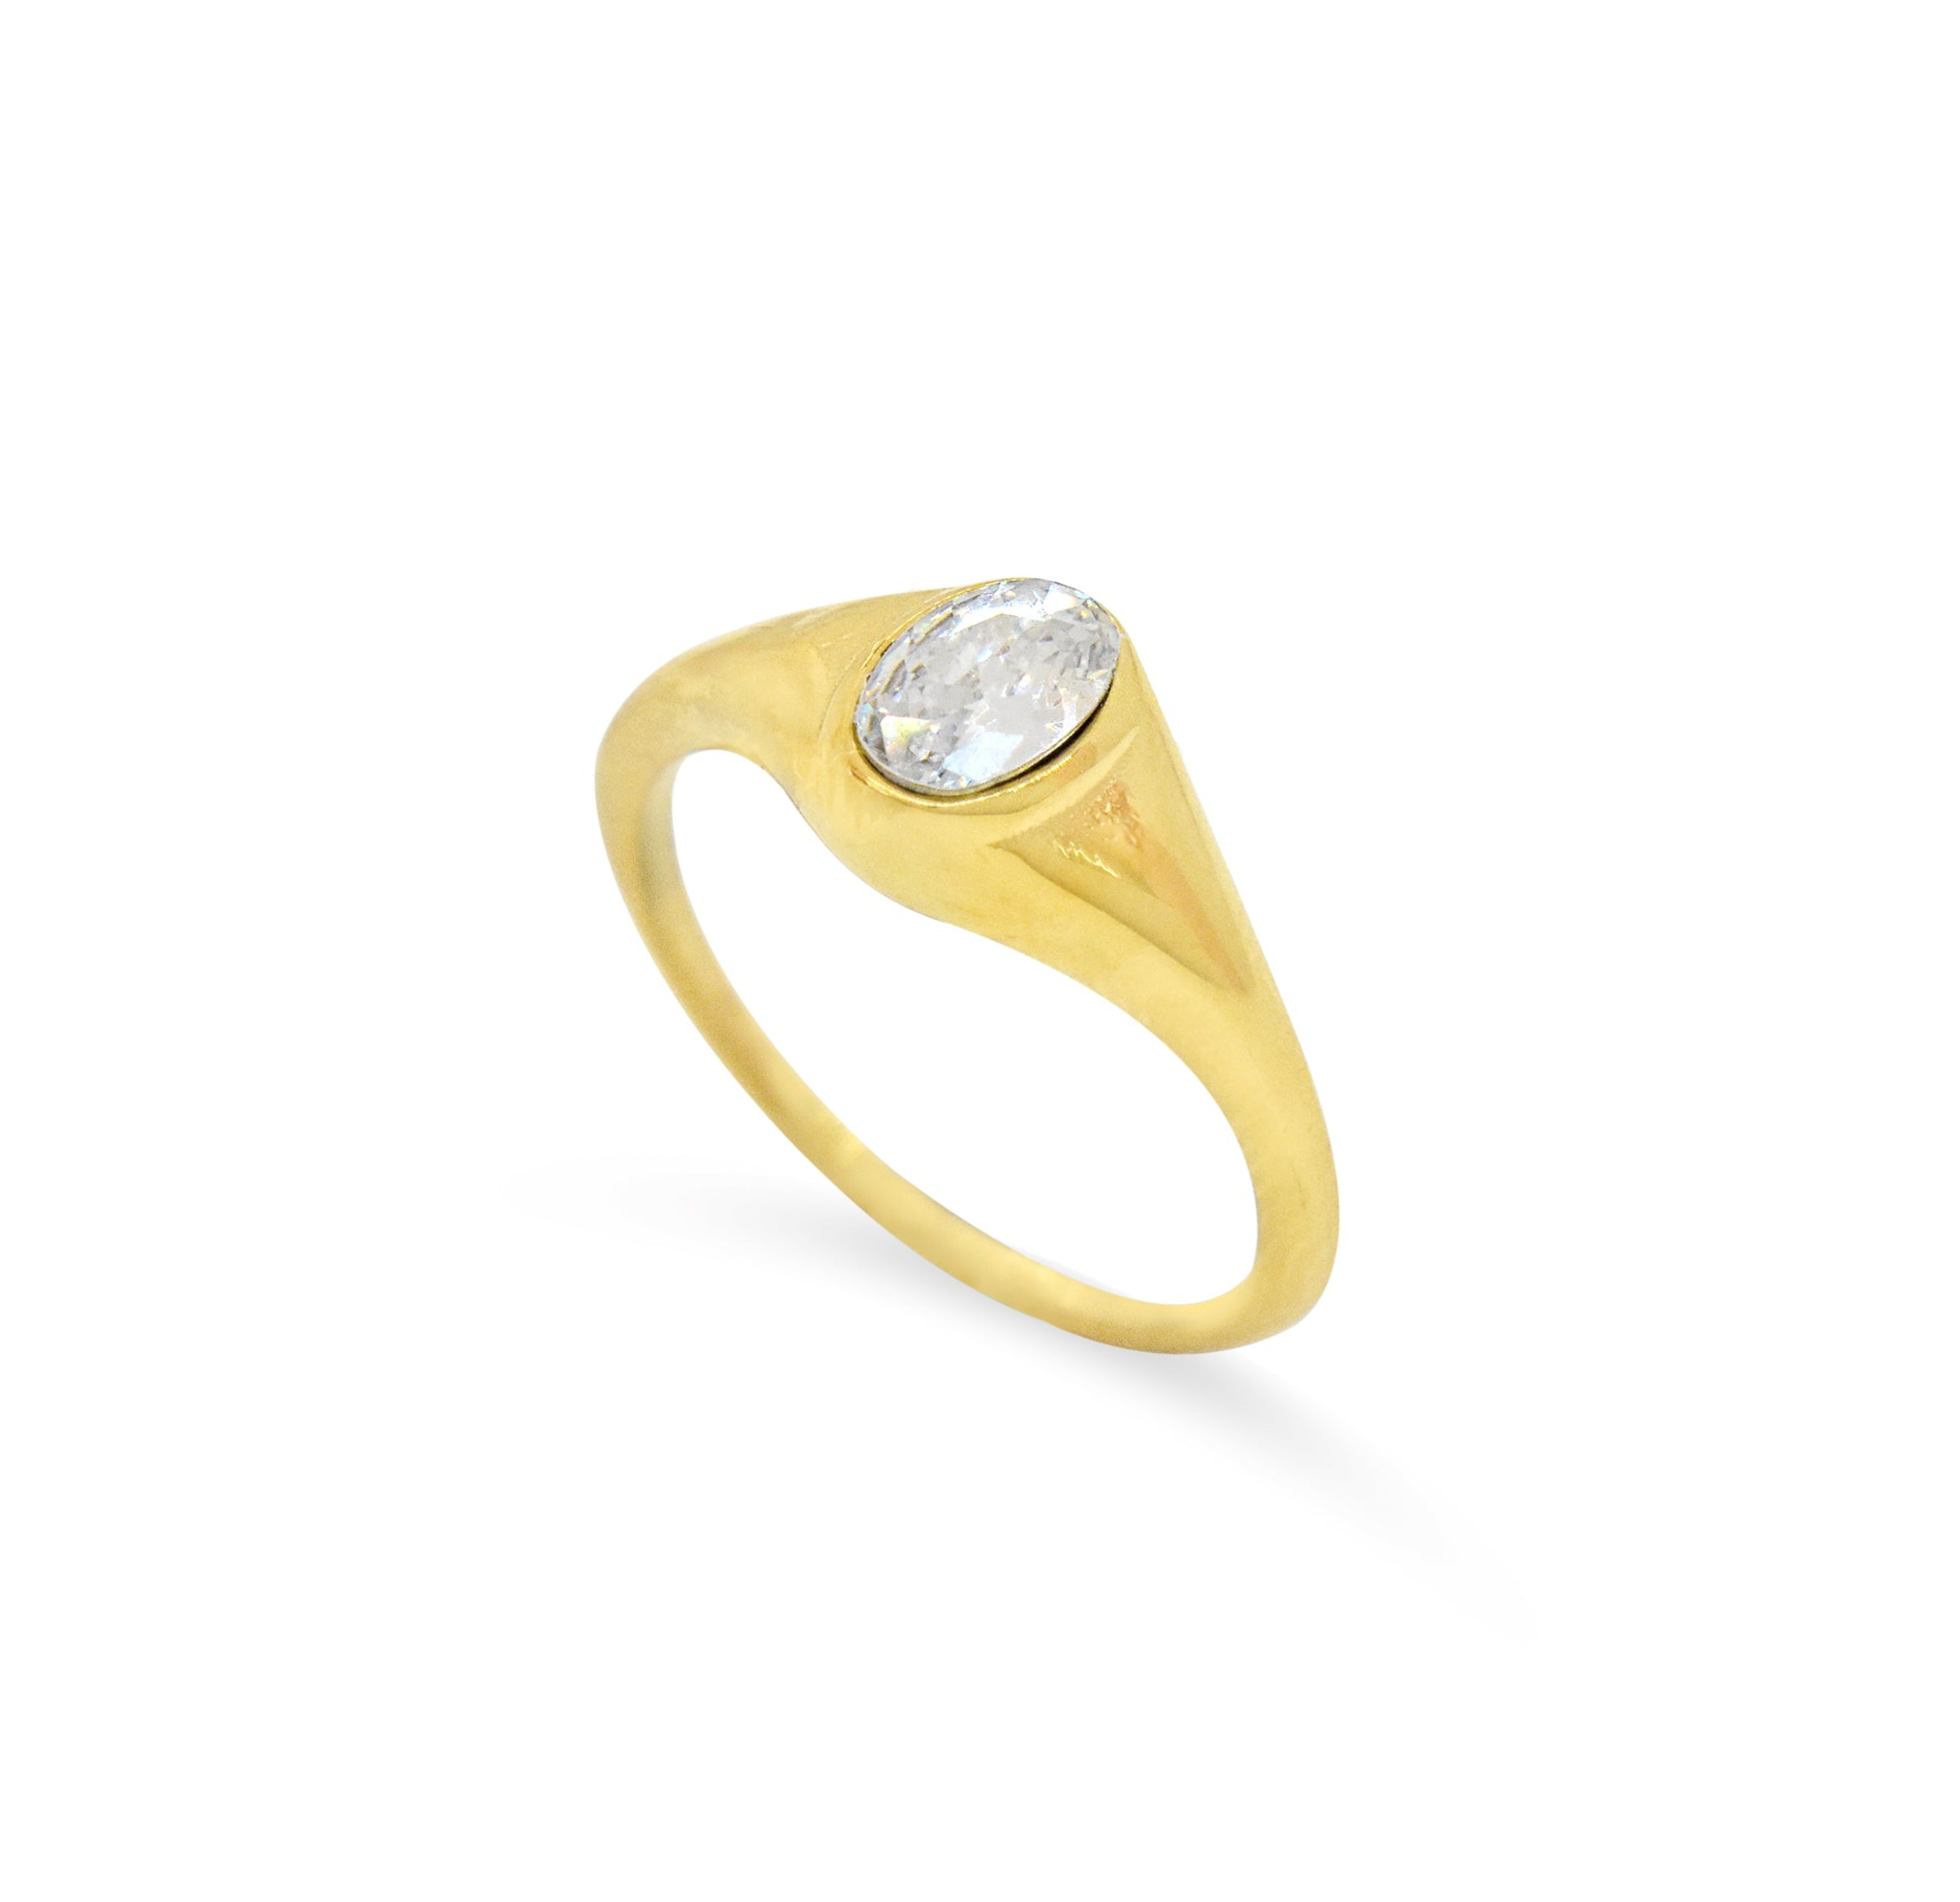 Jeanie gold oval stone ring. Waterproof jewelry